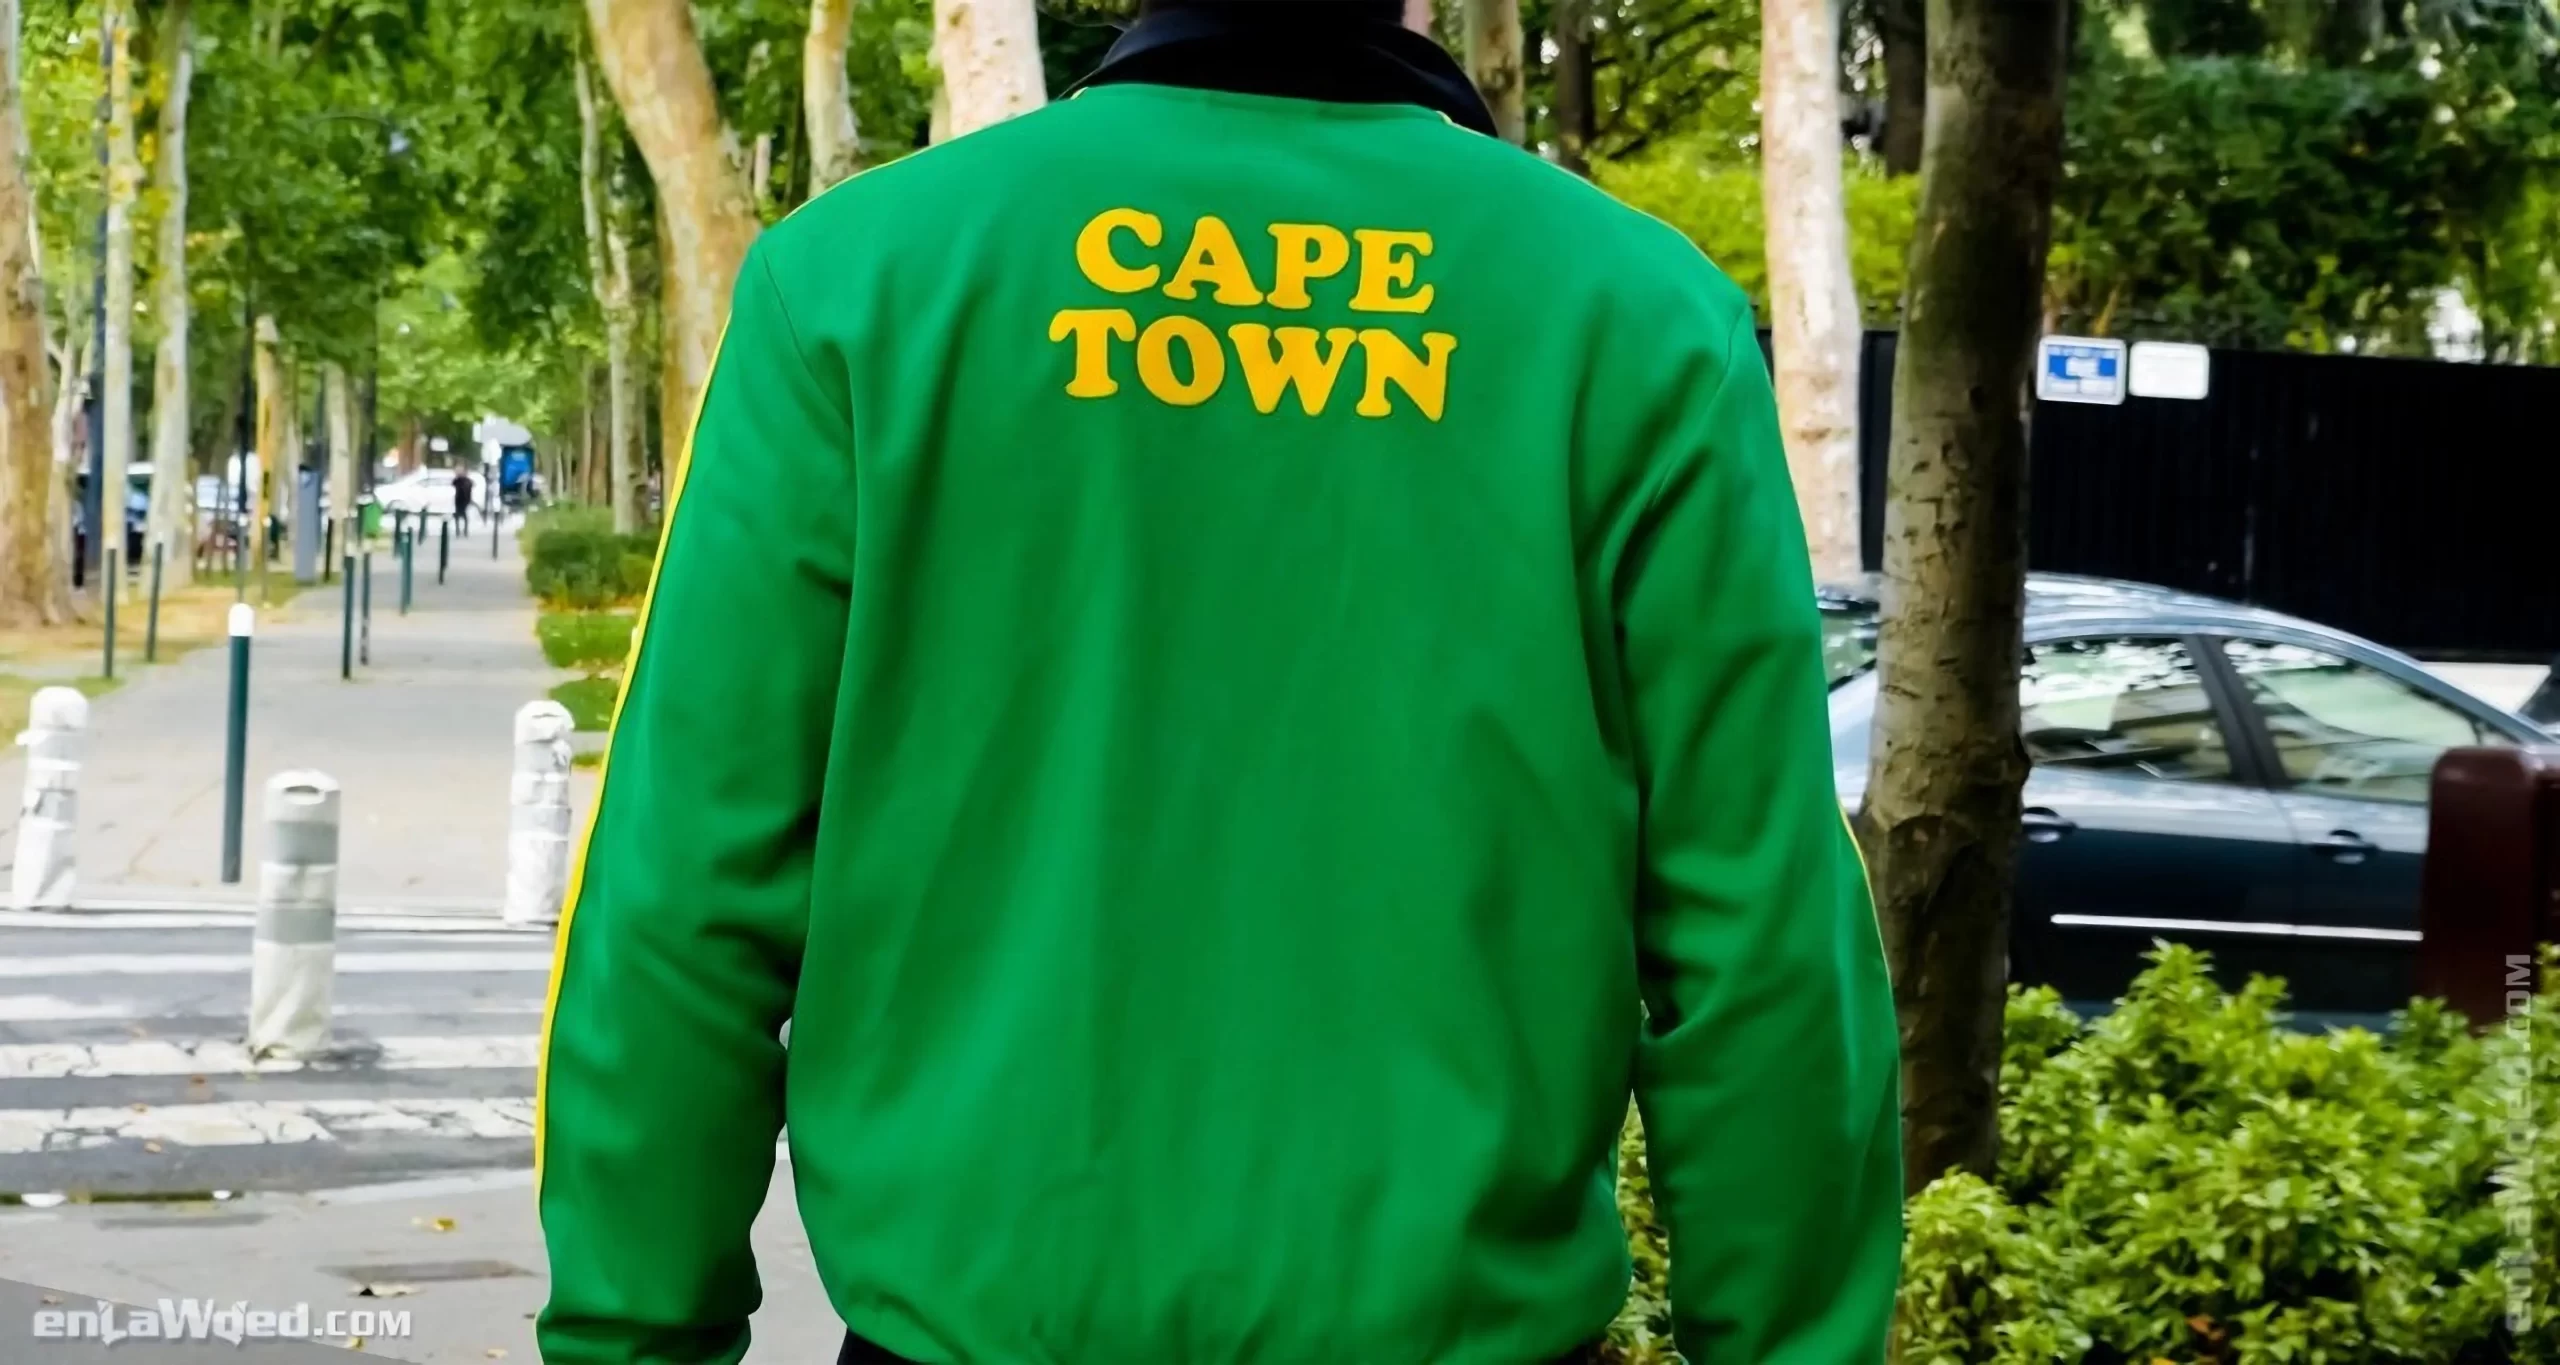 Men’s 2006 Cape Town TT by Adidas Originals: Passionate (EnLawded.com file #lmchk90459ip2y122273kg9st)